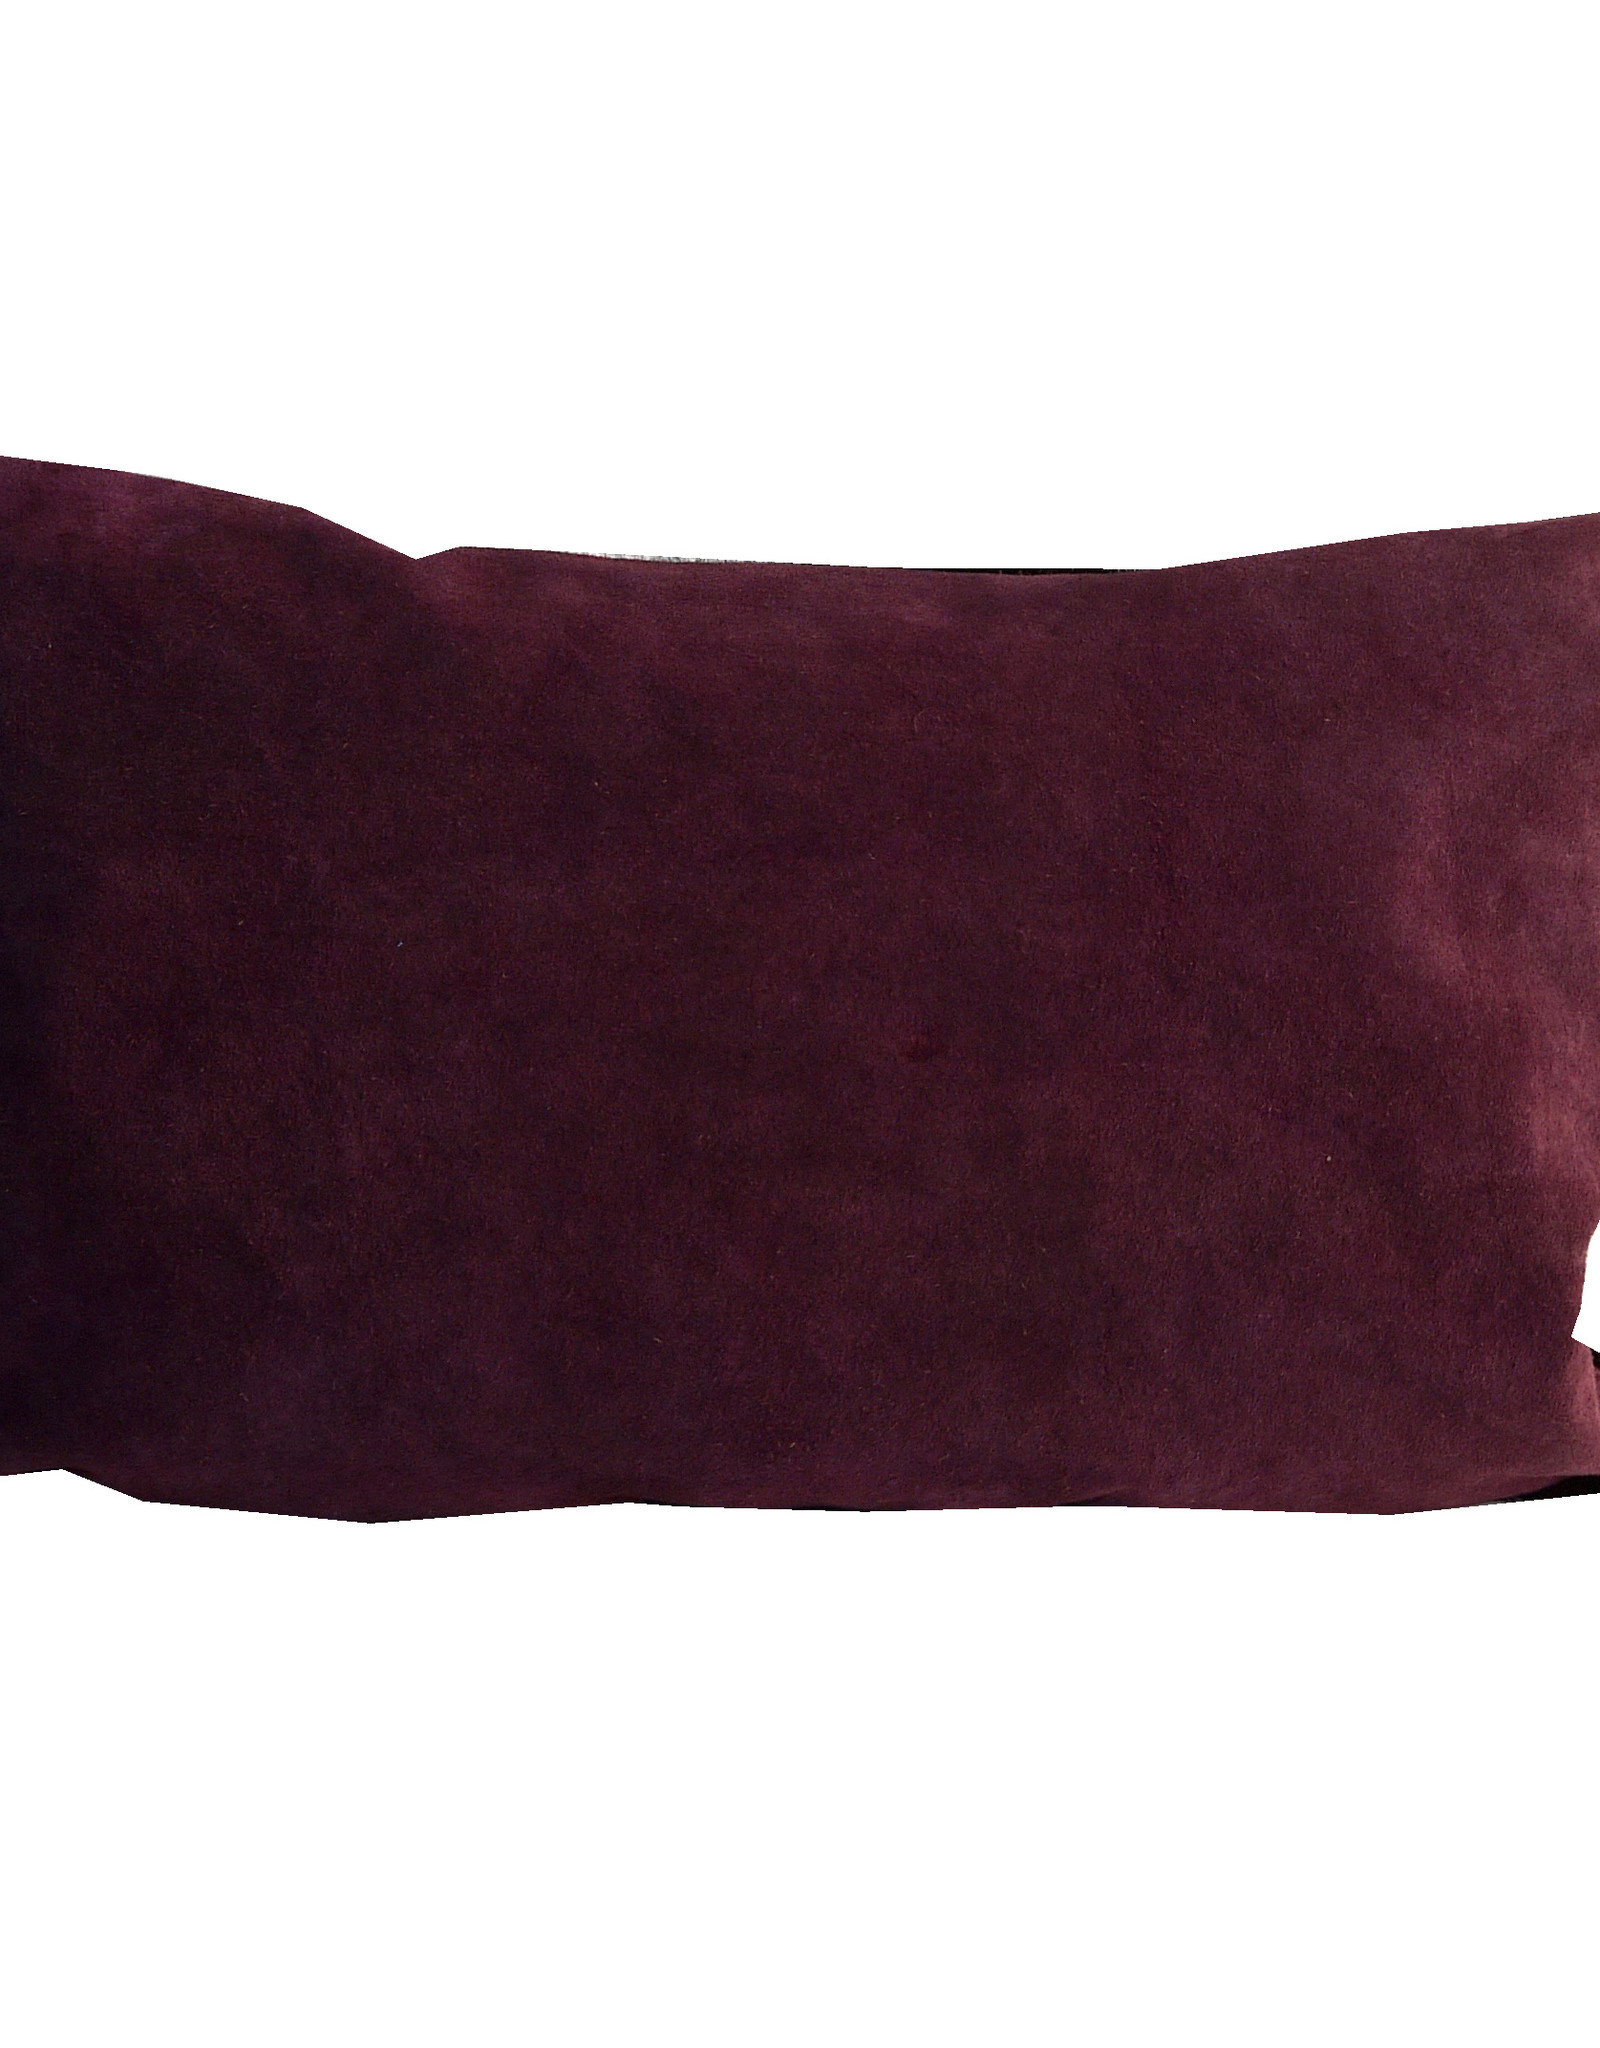 Design Springbok Cushion Violet KD04